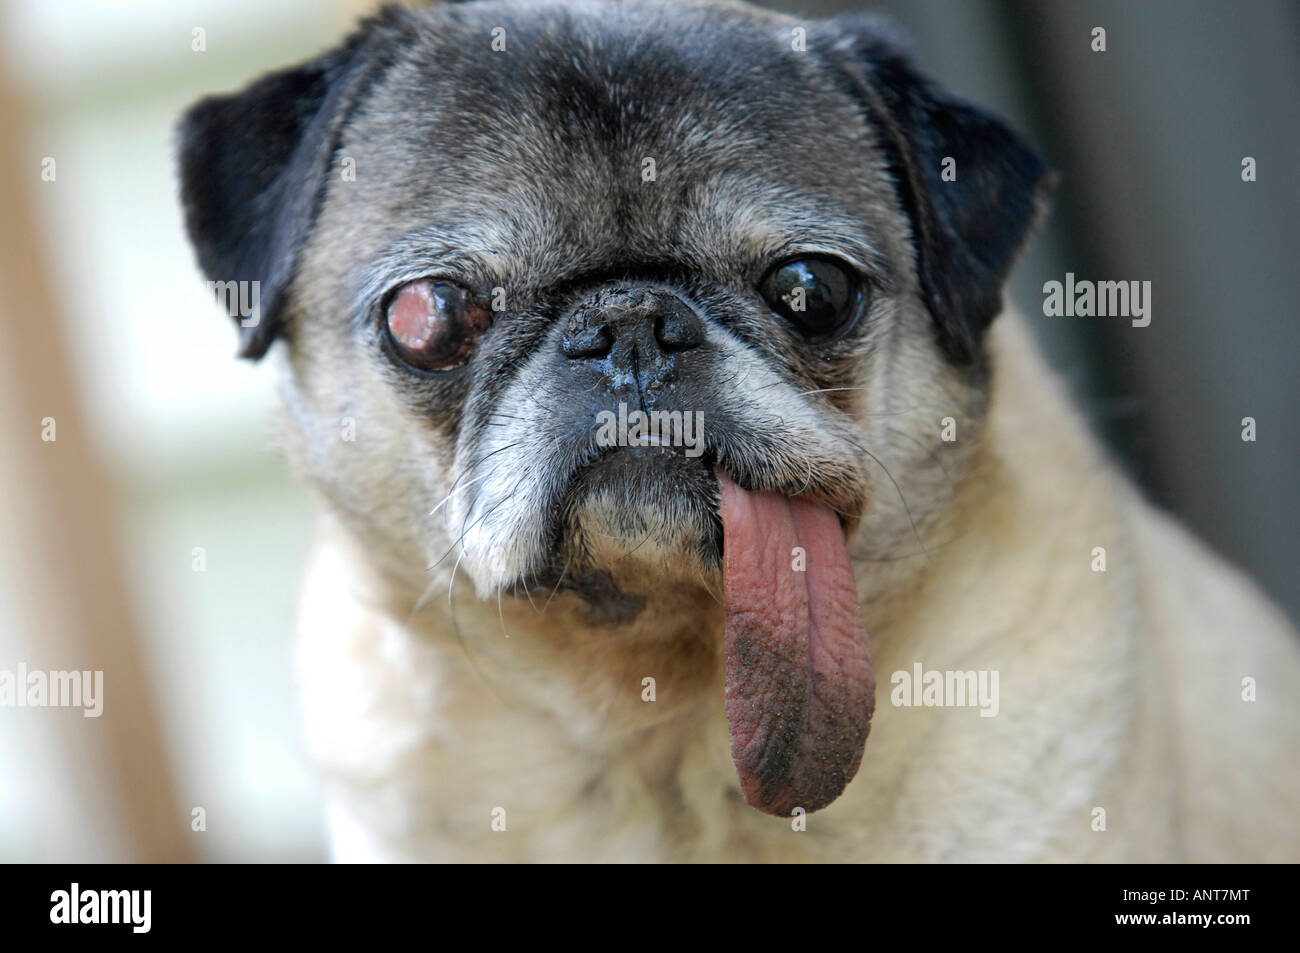 Pug dog with long tongue and eye lesion Stock Photo